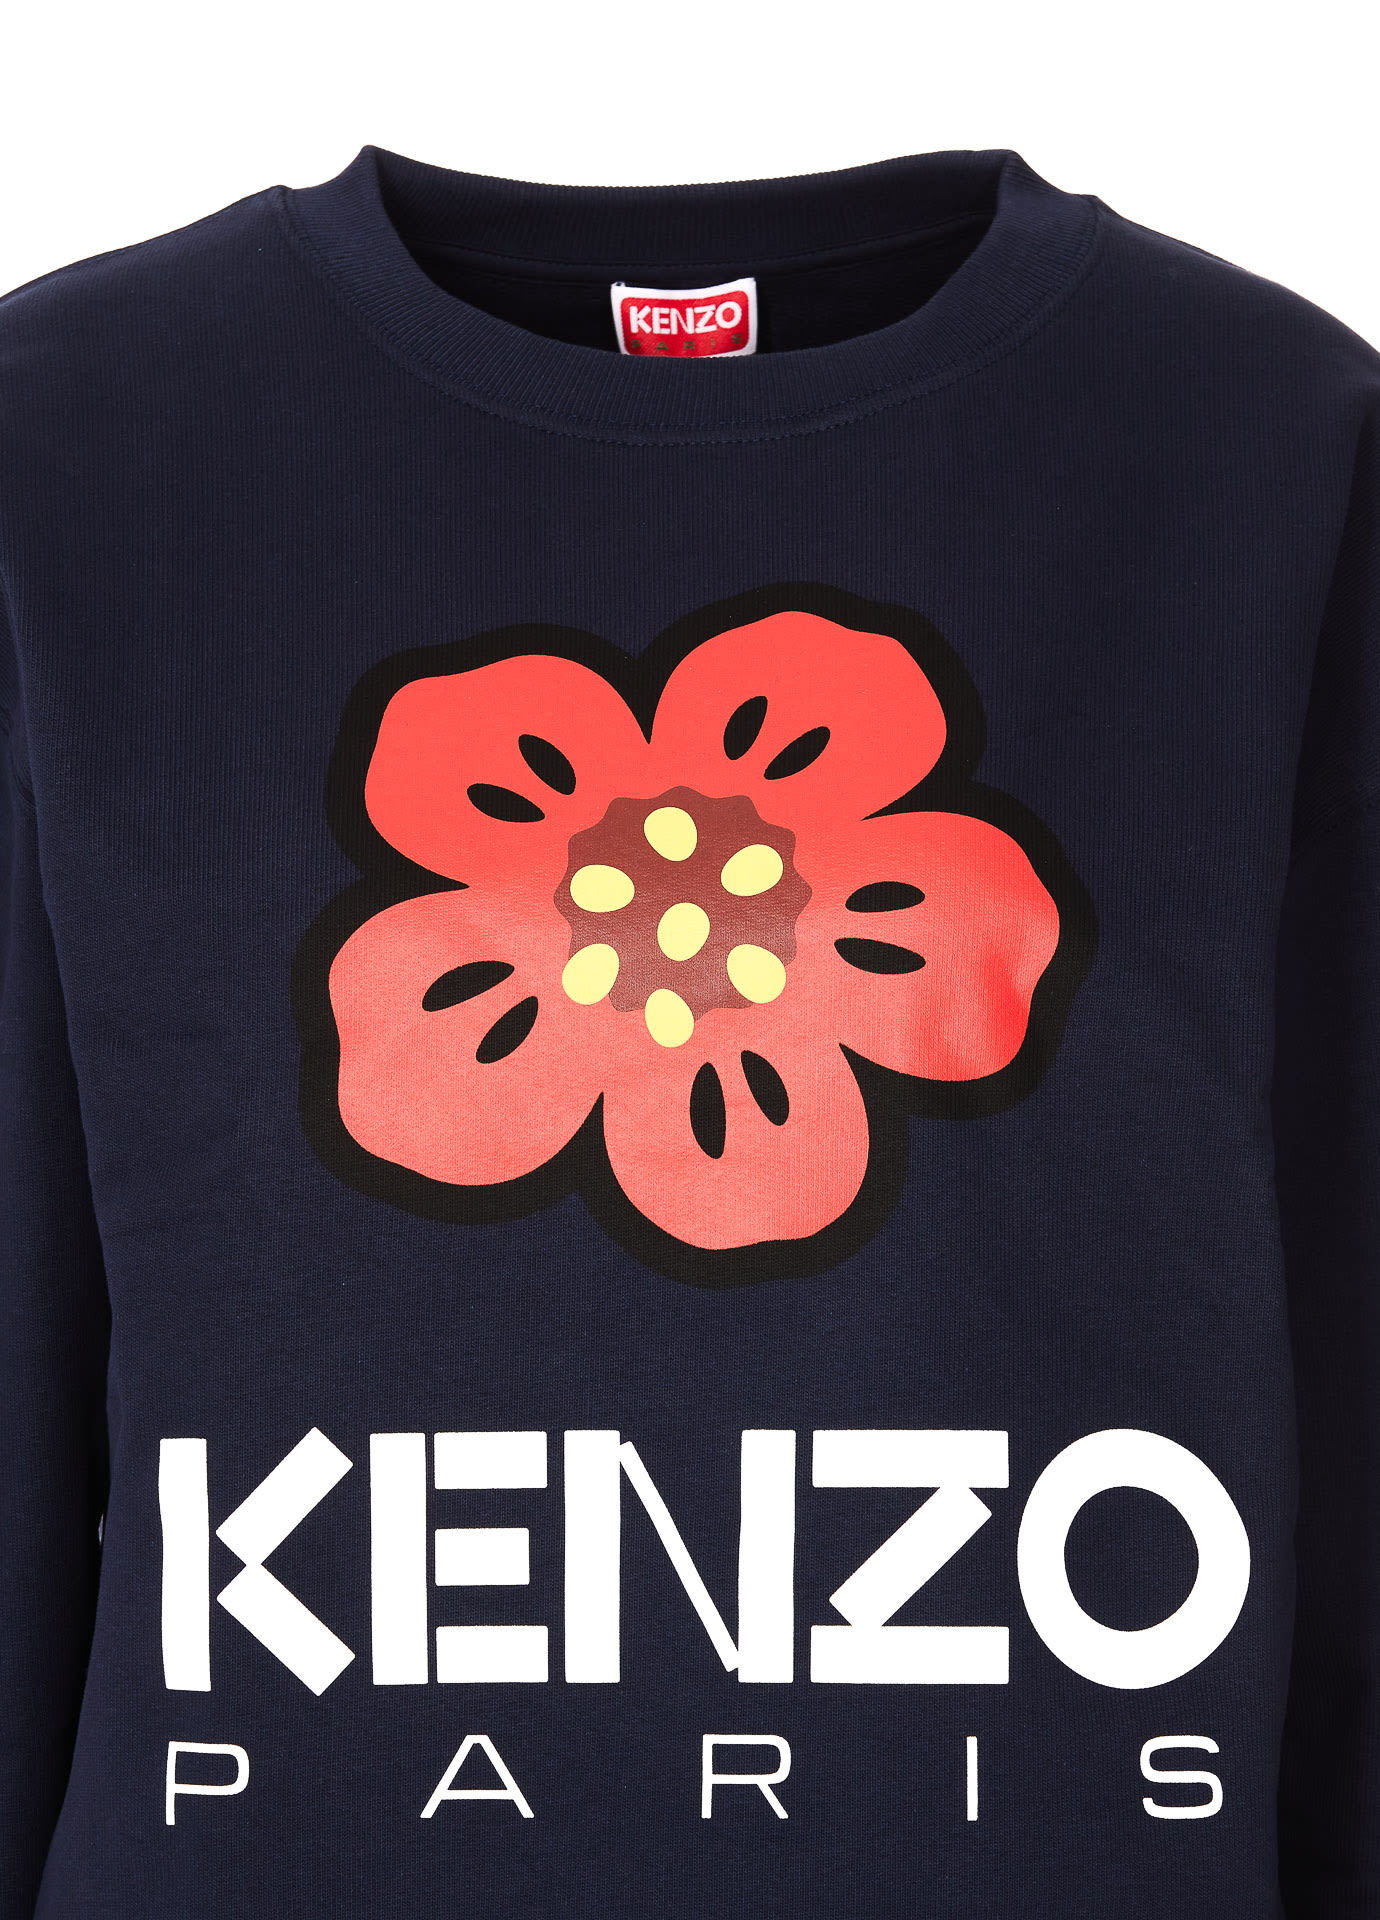 Kenzo Paris Sweatshirt | Smart Closet